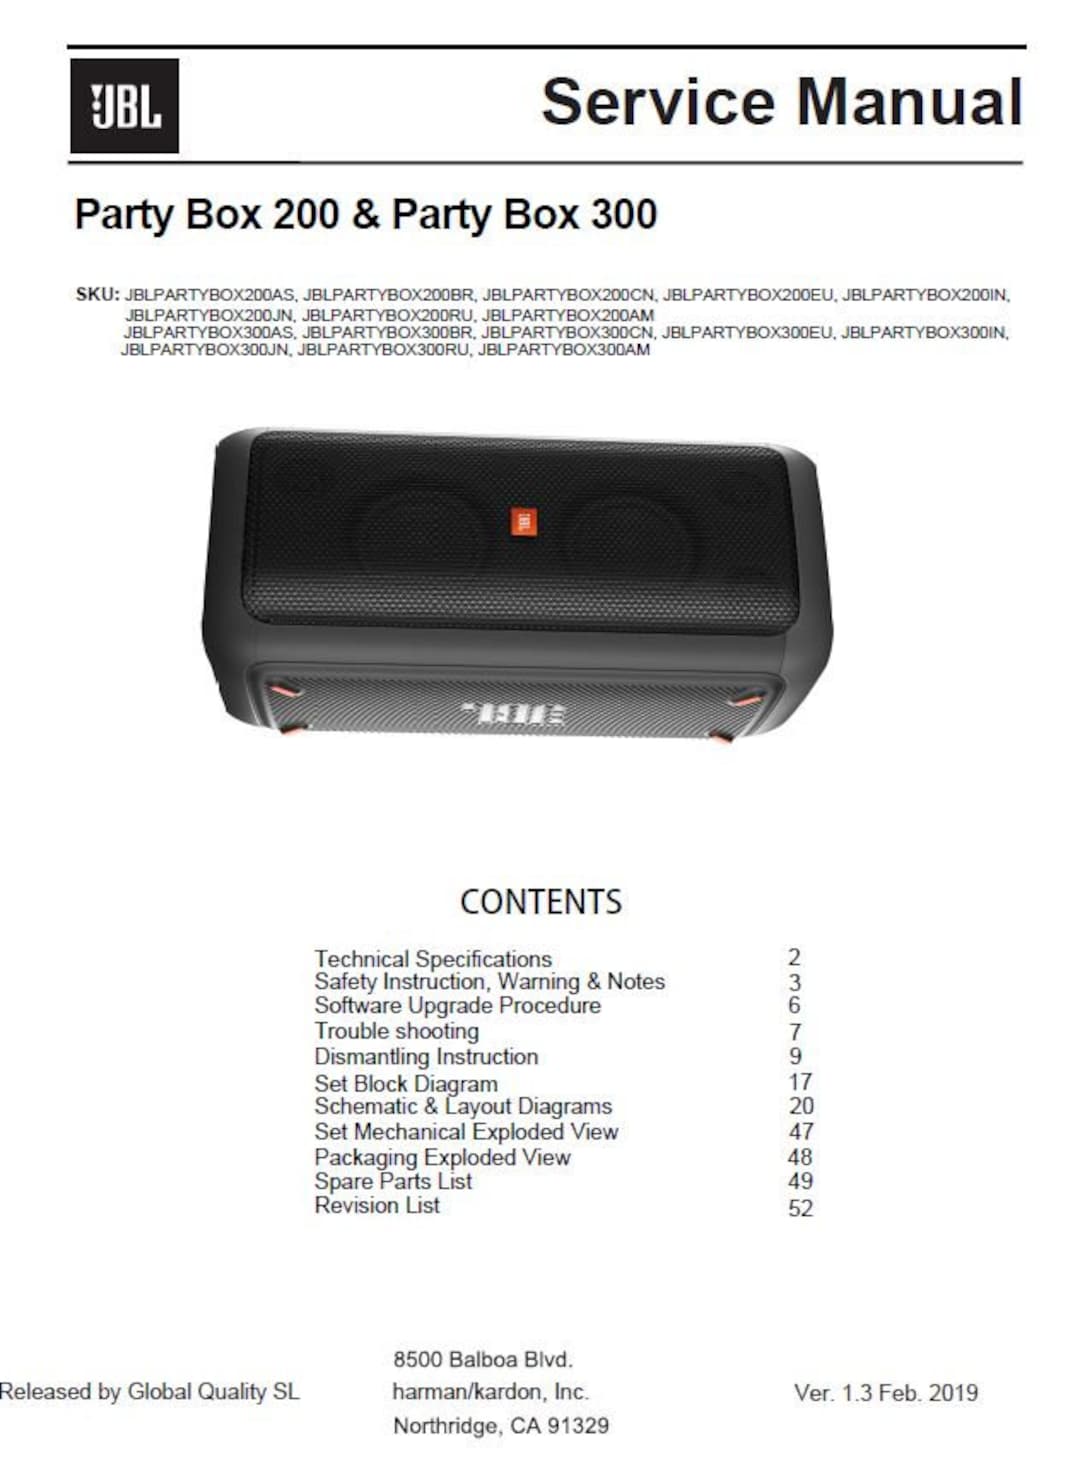 For en dagstur Dæmon Vidner JBL Partybox 200 Partybox 300 Ver.1.3 Service Manual PDF - Etsy Denmark